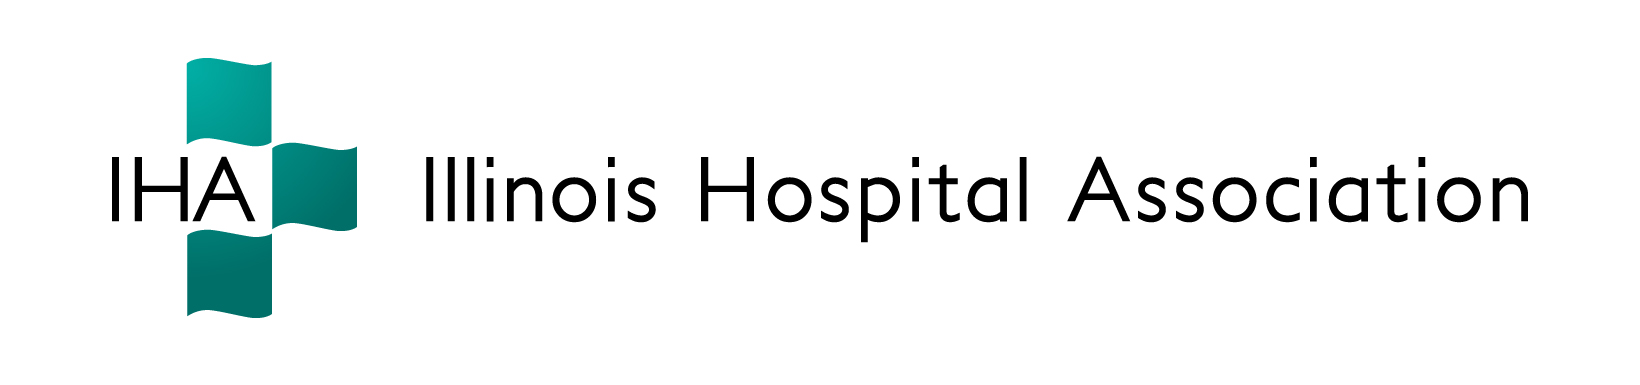 Illinois Hospital Association logo